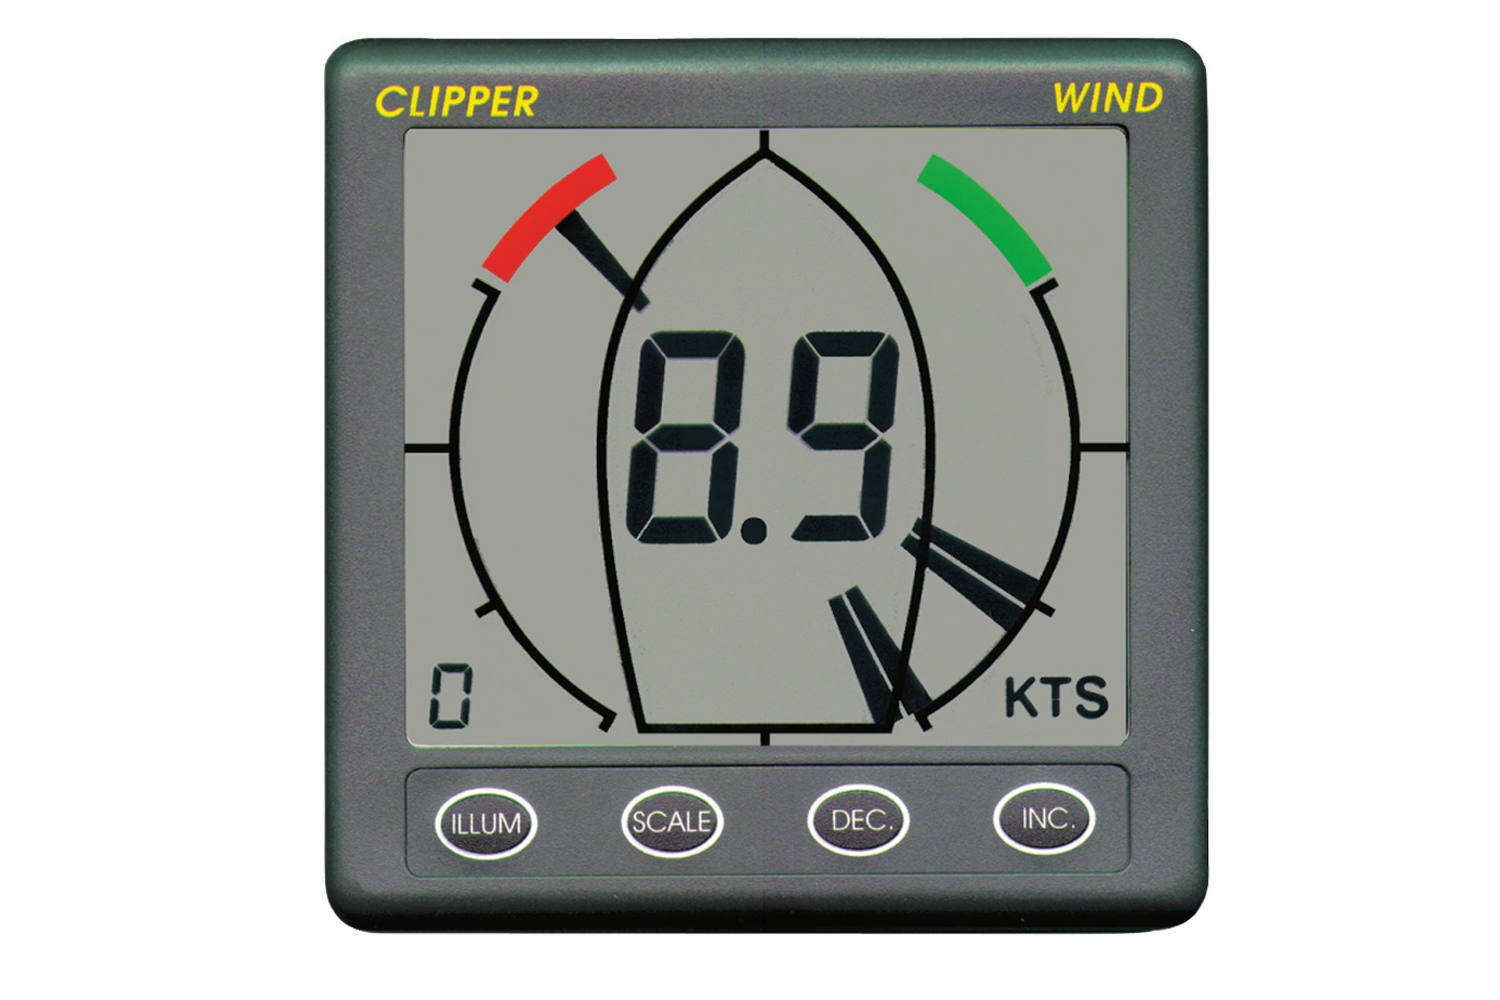 Nasa Clipper wind repeater display